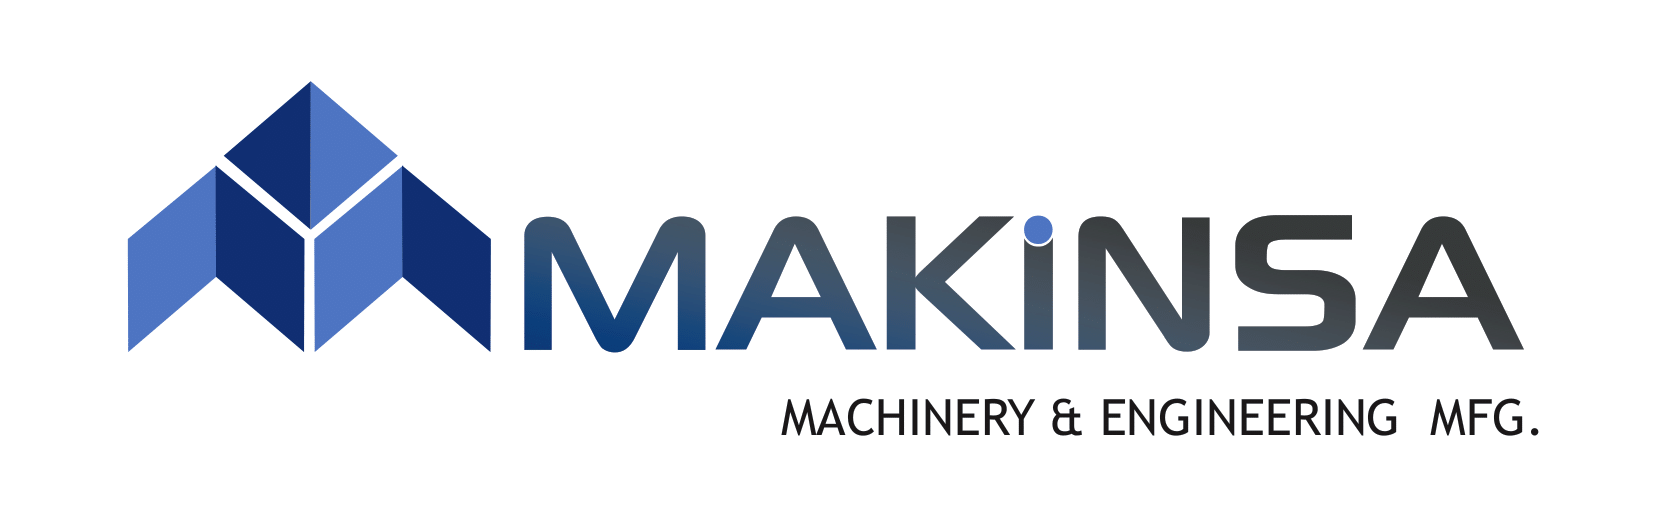 Makinsa Mühendislik ve Makine Sanayi Ticaret A.S. logo